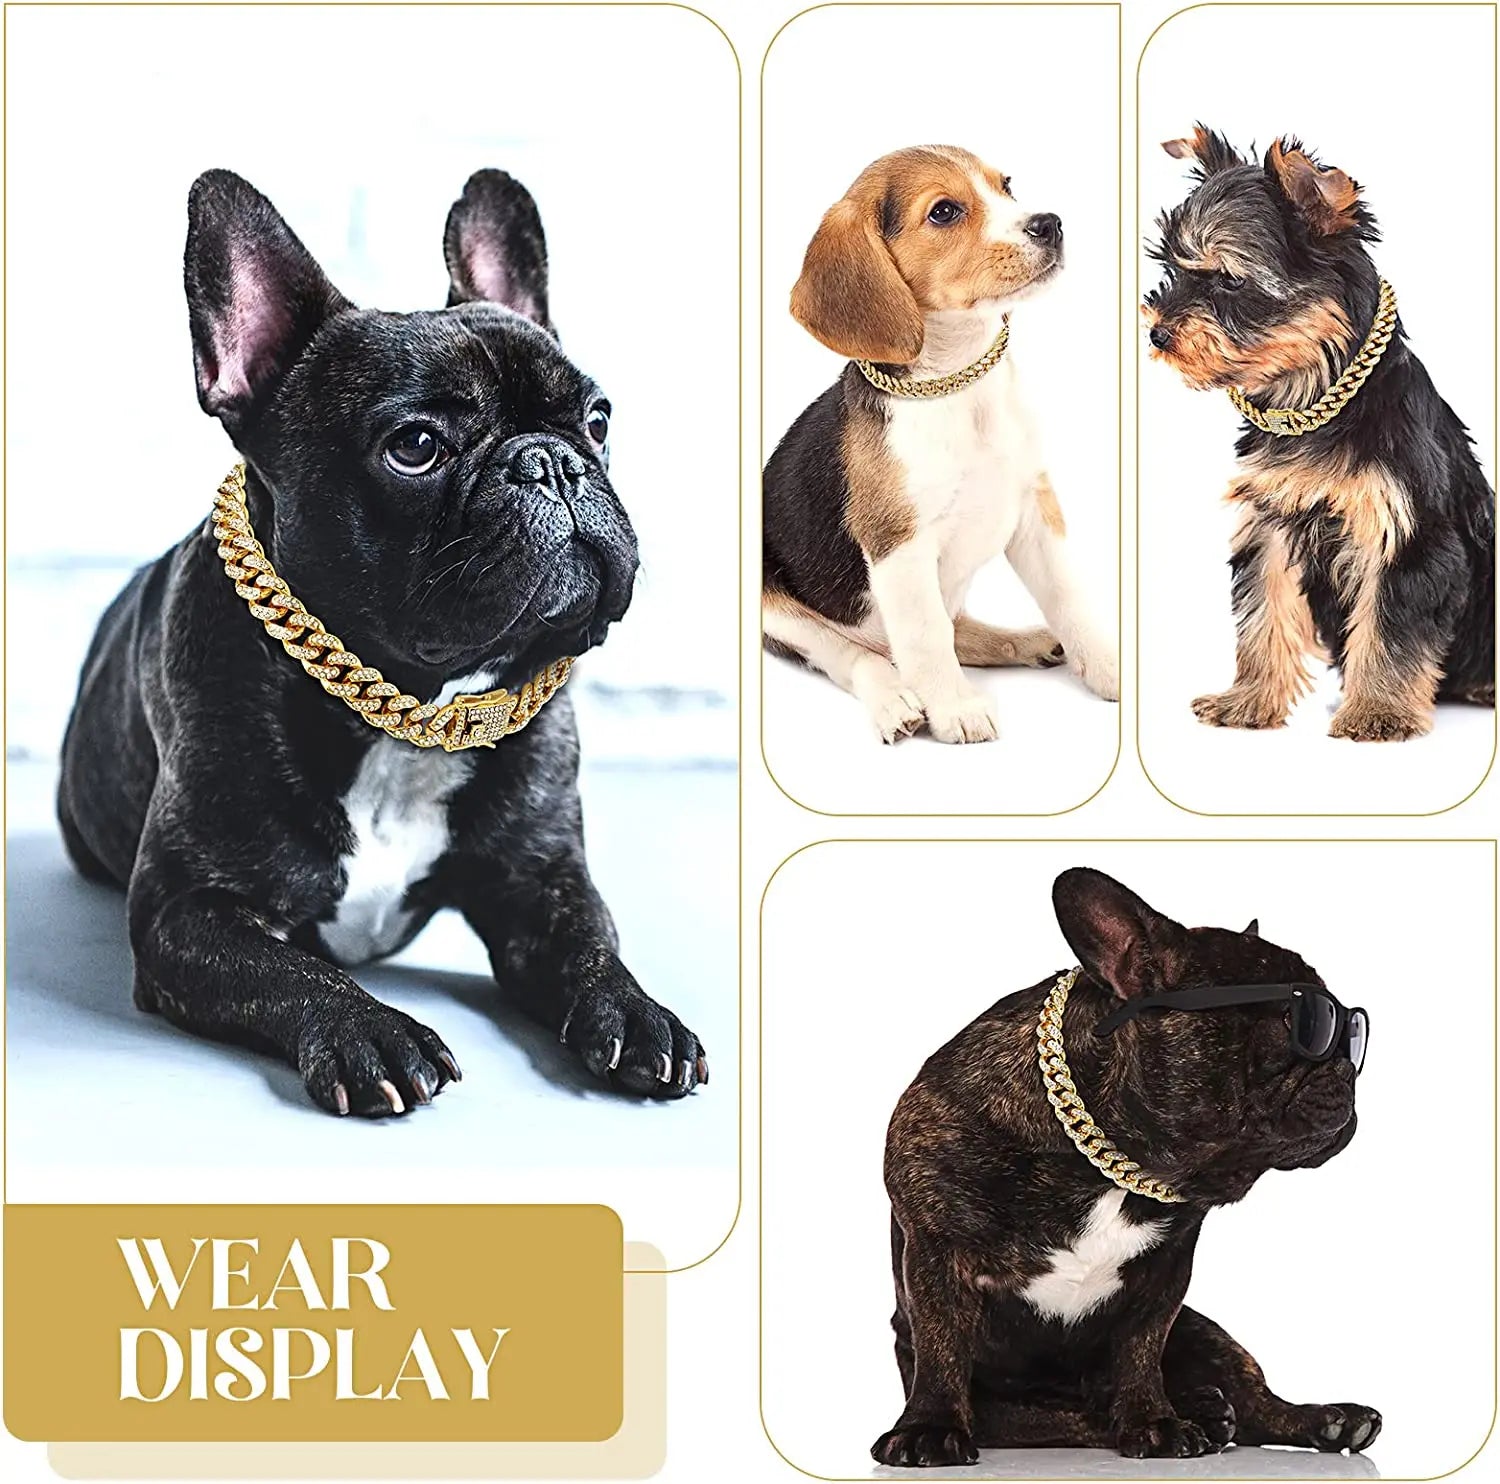 Luxury Personalized Zirconia Pet Chain Collar | Hypoallergenic & Lead/Nickel Free | Pet Jewelry